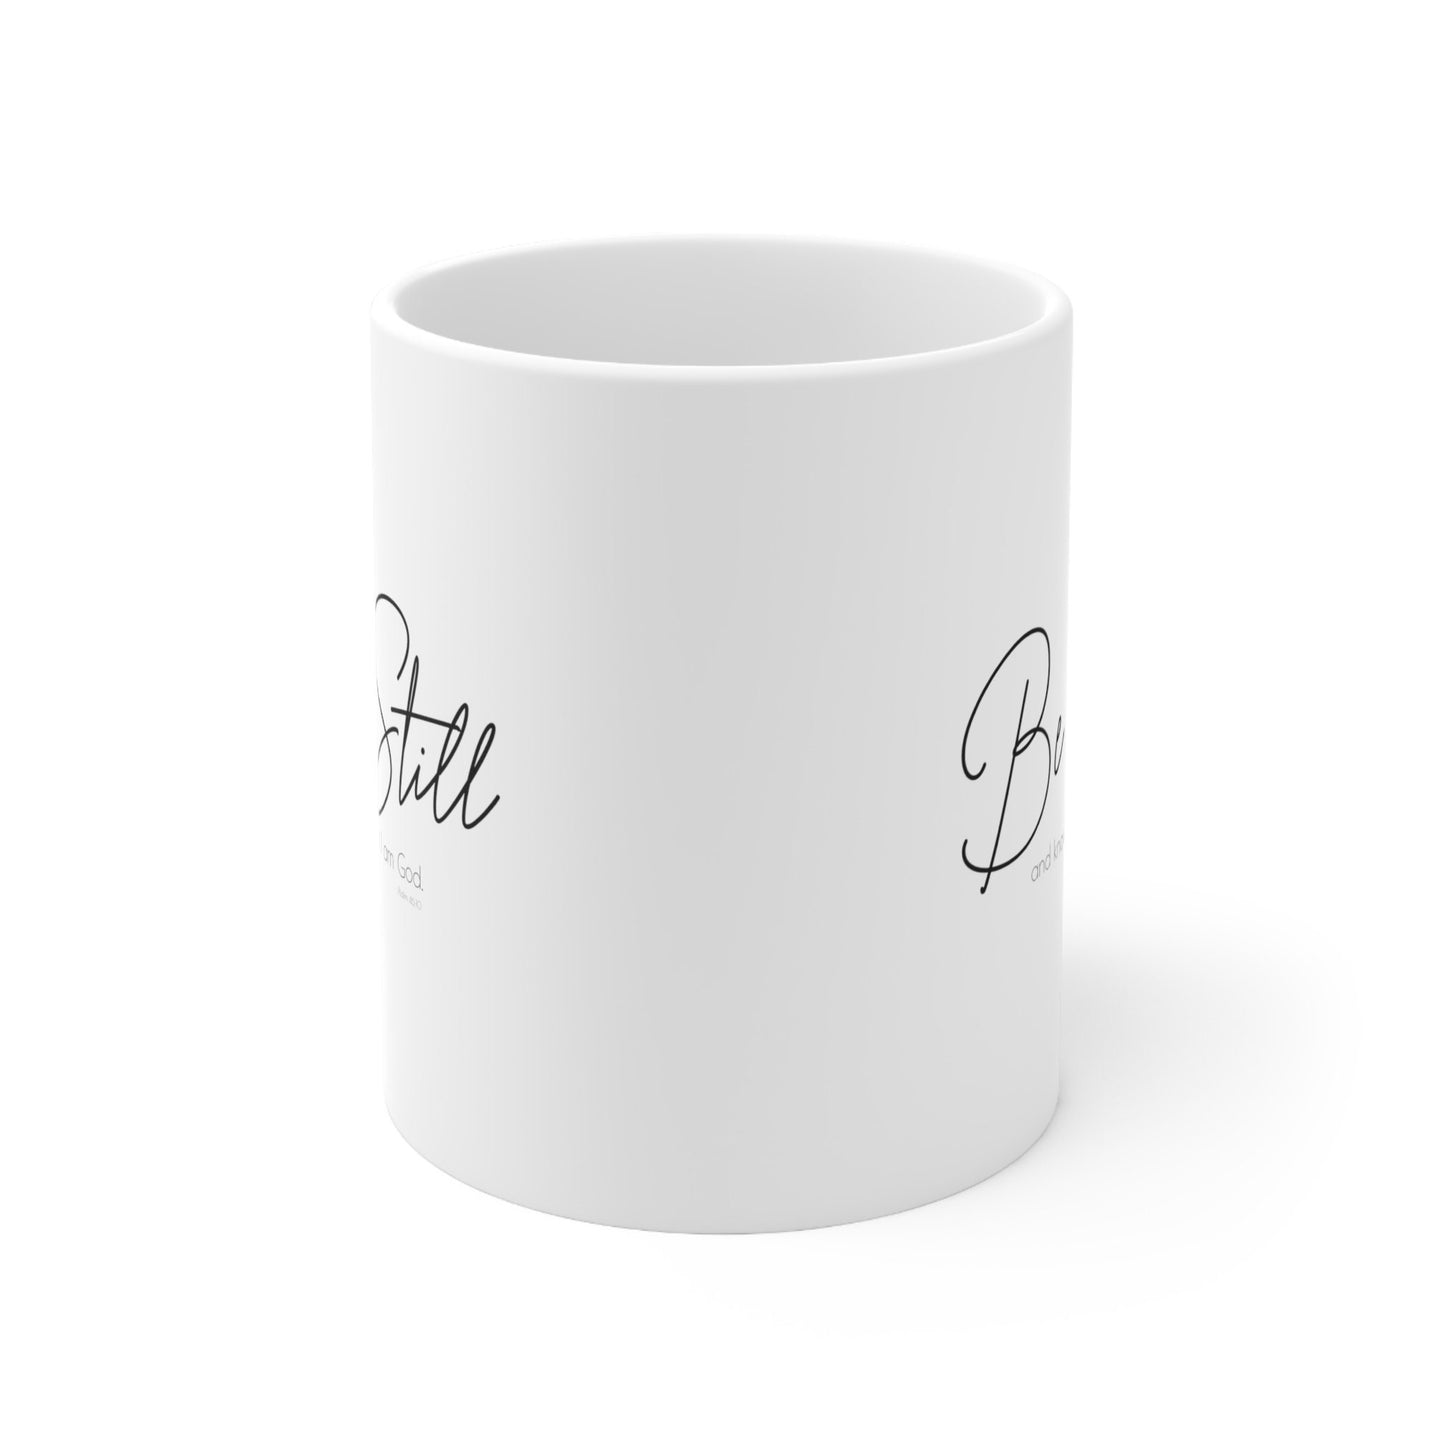 Be Still Mug, Scripture Mug, Religious Mug, Gift for Her, Gift for Him, Ceramic Mug 11oz